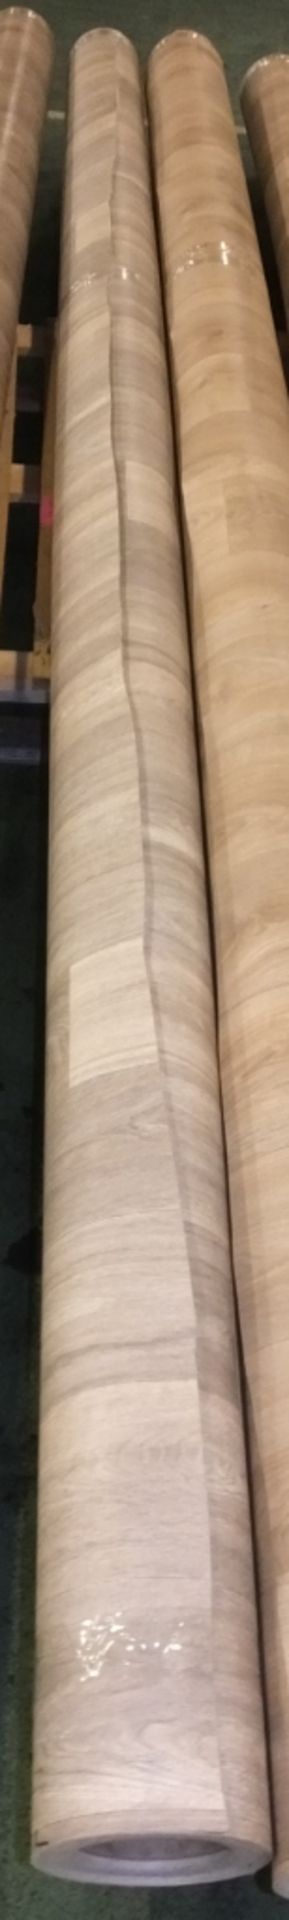 Wood Effect Vinyl Flooring - Approx 4M x 8M